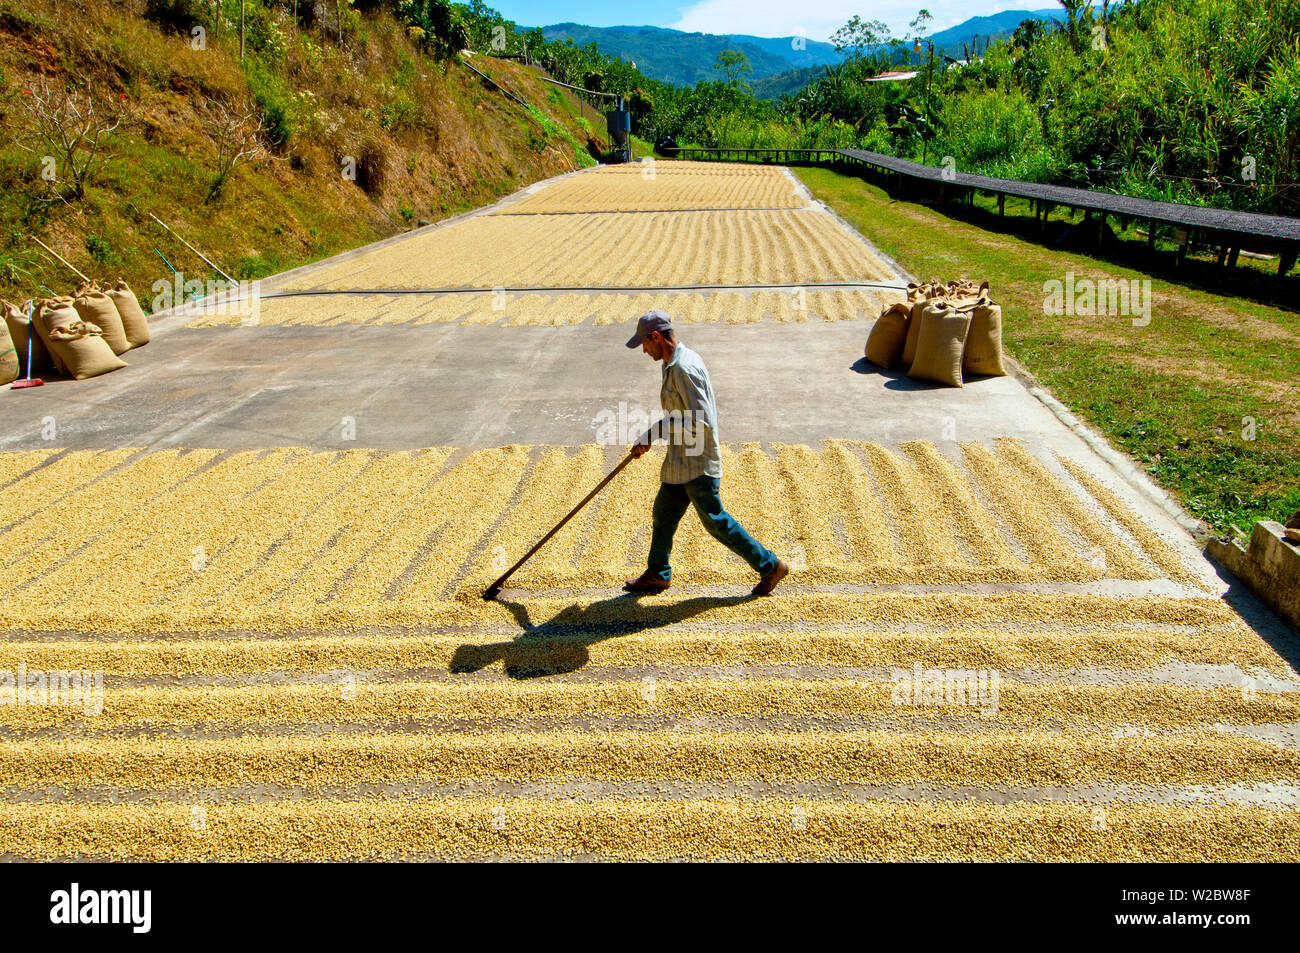 Costa Rica, San Marcos de Tarrazu, azienda di caffè, essiccamento al sole i chicchi di caffè, il naturale processo di asciugatura raggiunge la massima qualità Foto Stock